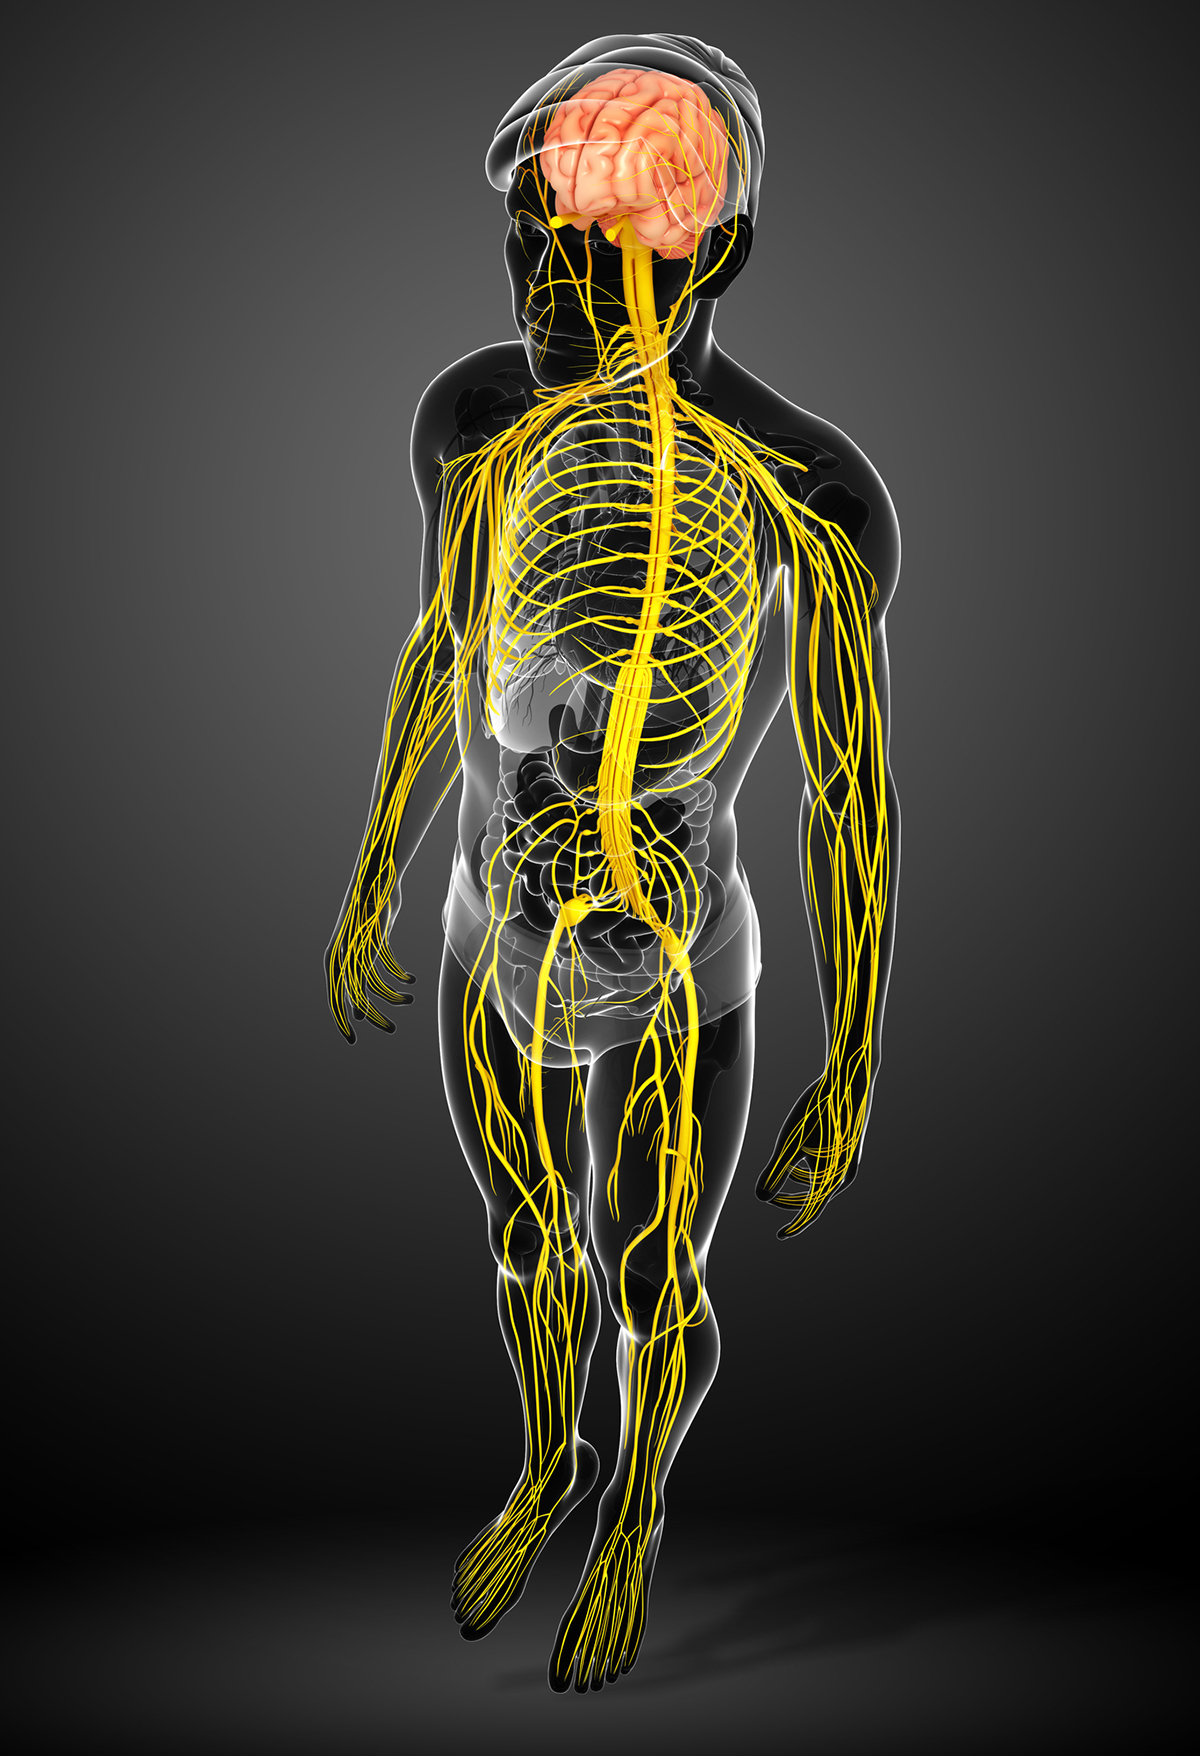 Peripheral nerve system